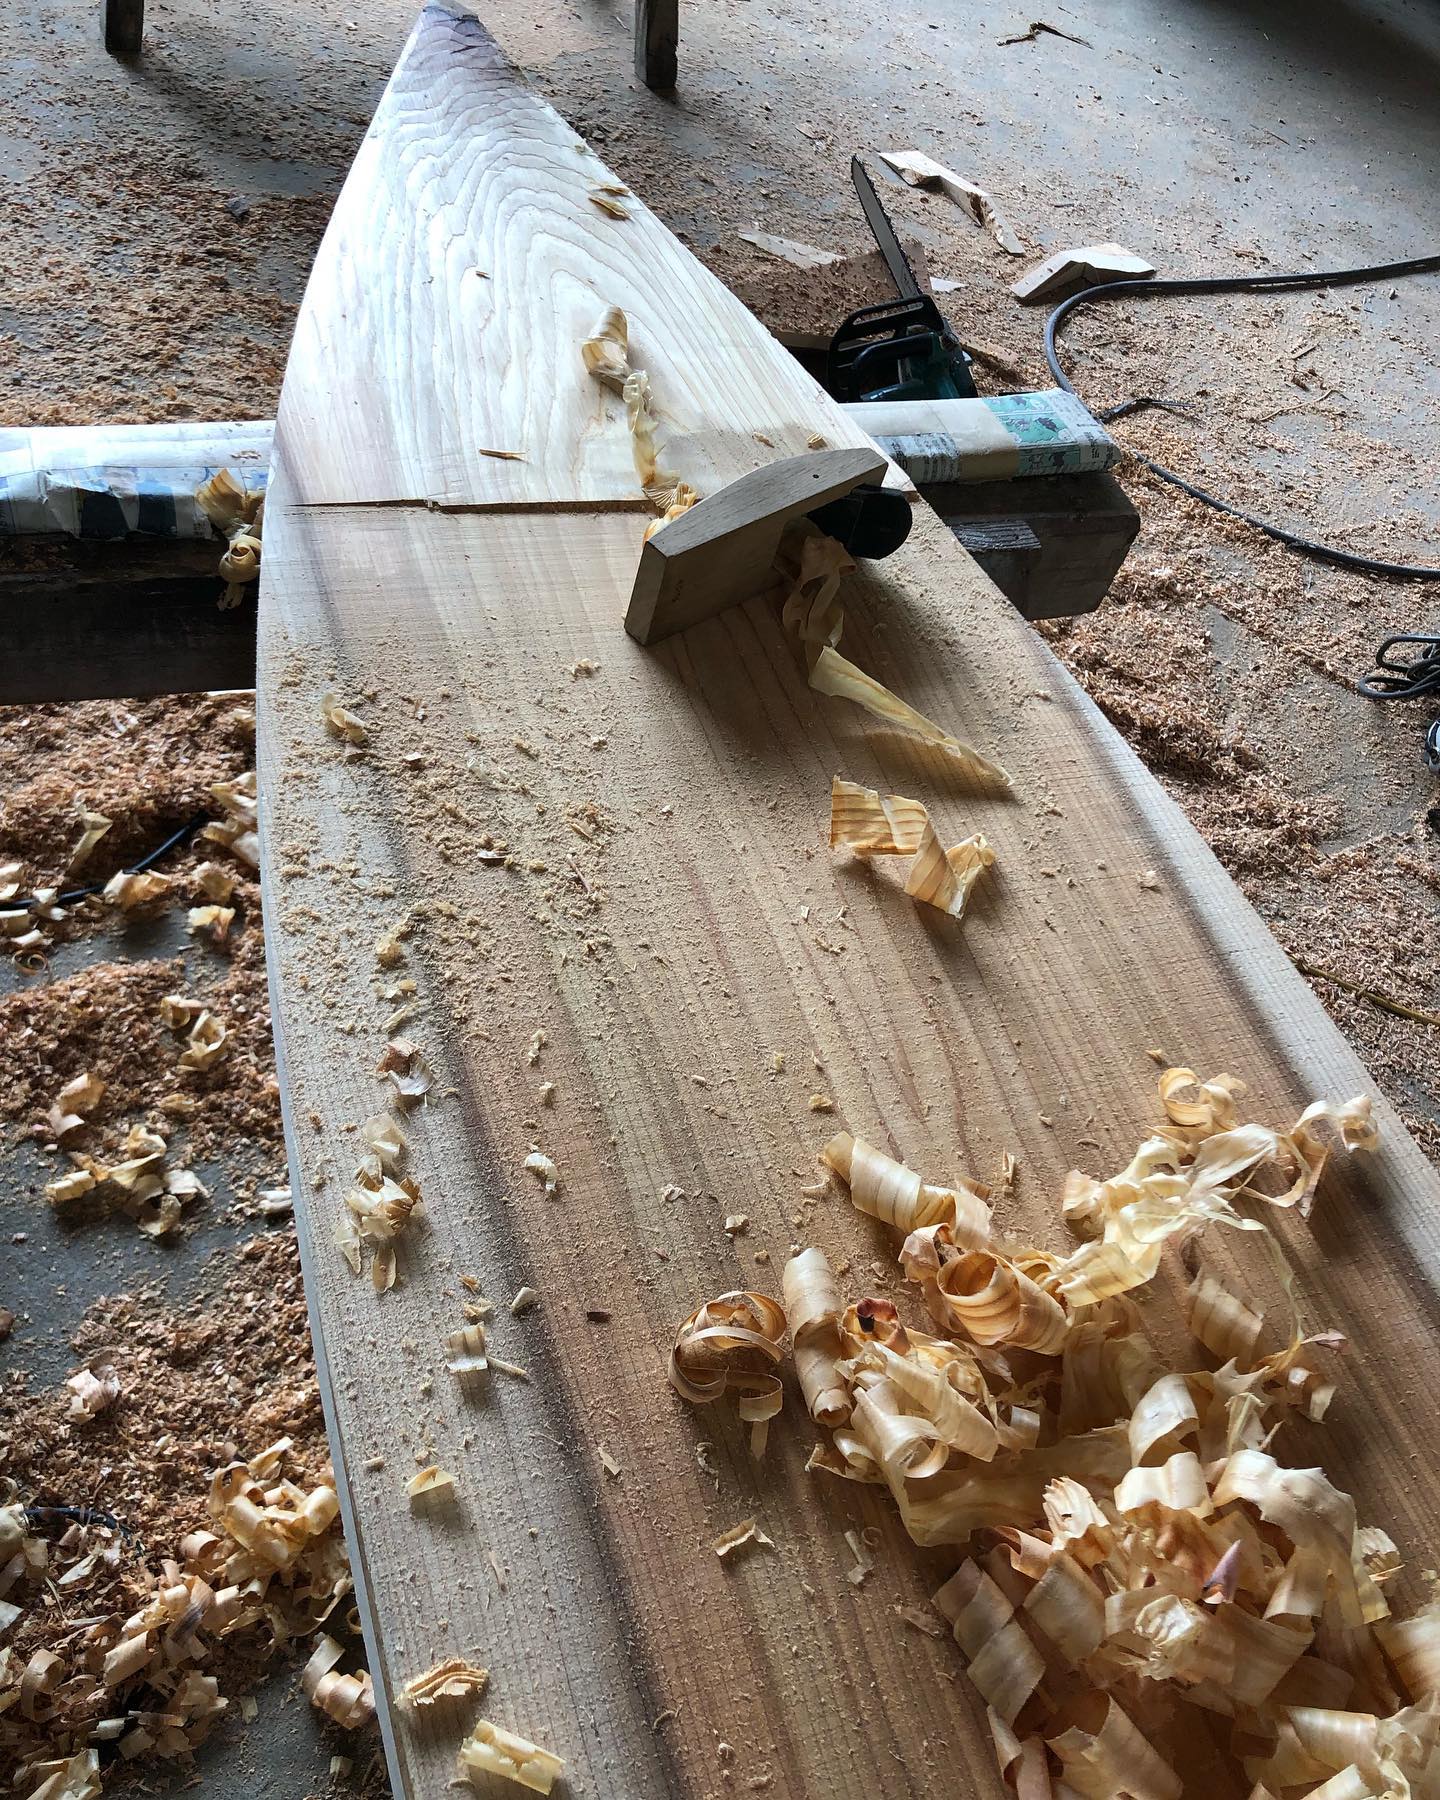 KUKUウッドボード製作中ロッカー、レールを調整しながら削ってます#杉のサーフボード #木頭杉サーフボード @woodboardkuku @woodwork_naka @nakawood